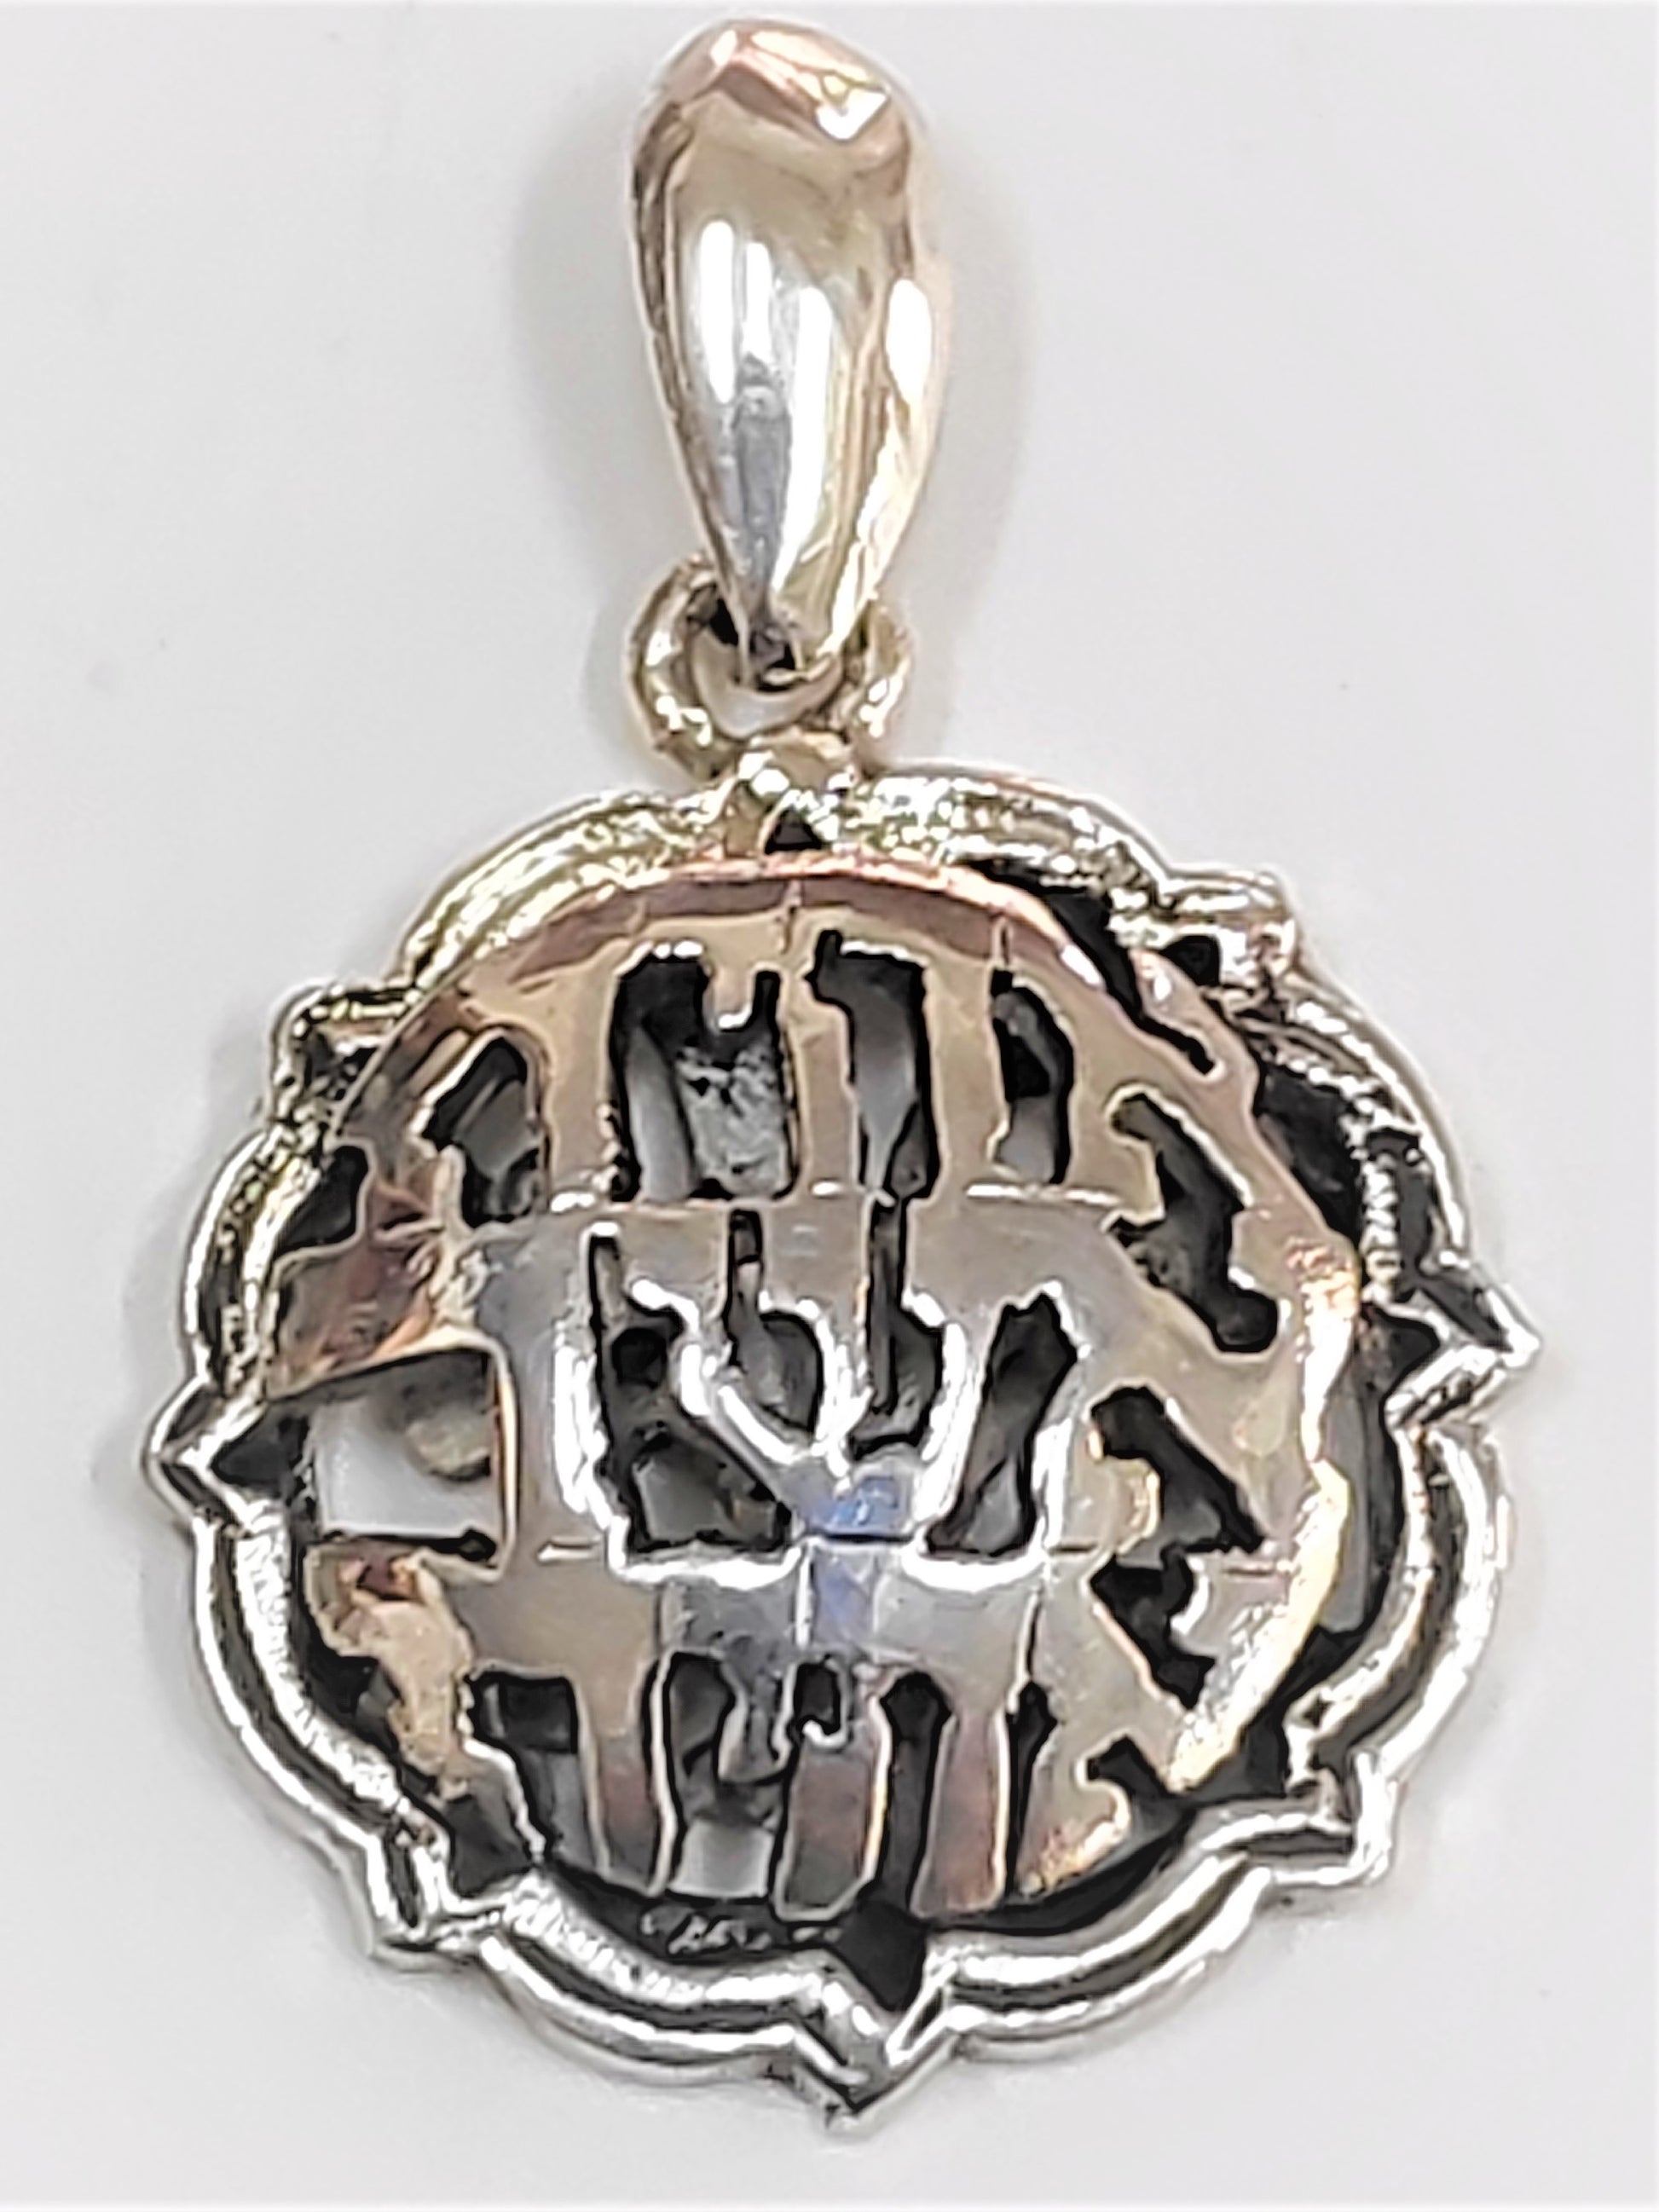 'I Am that I Am' (Exodus 3:14) in Hebrew - Silver Pendant - Made in Israel - Biblicaljewels